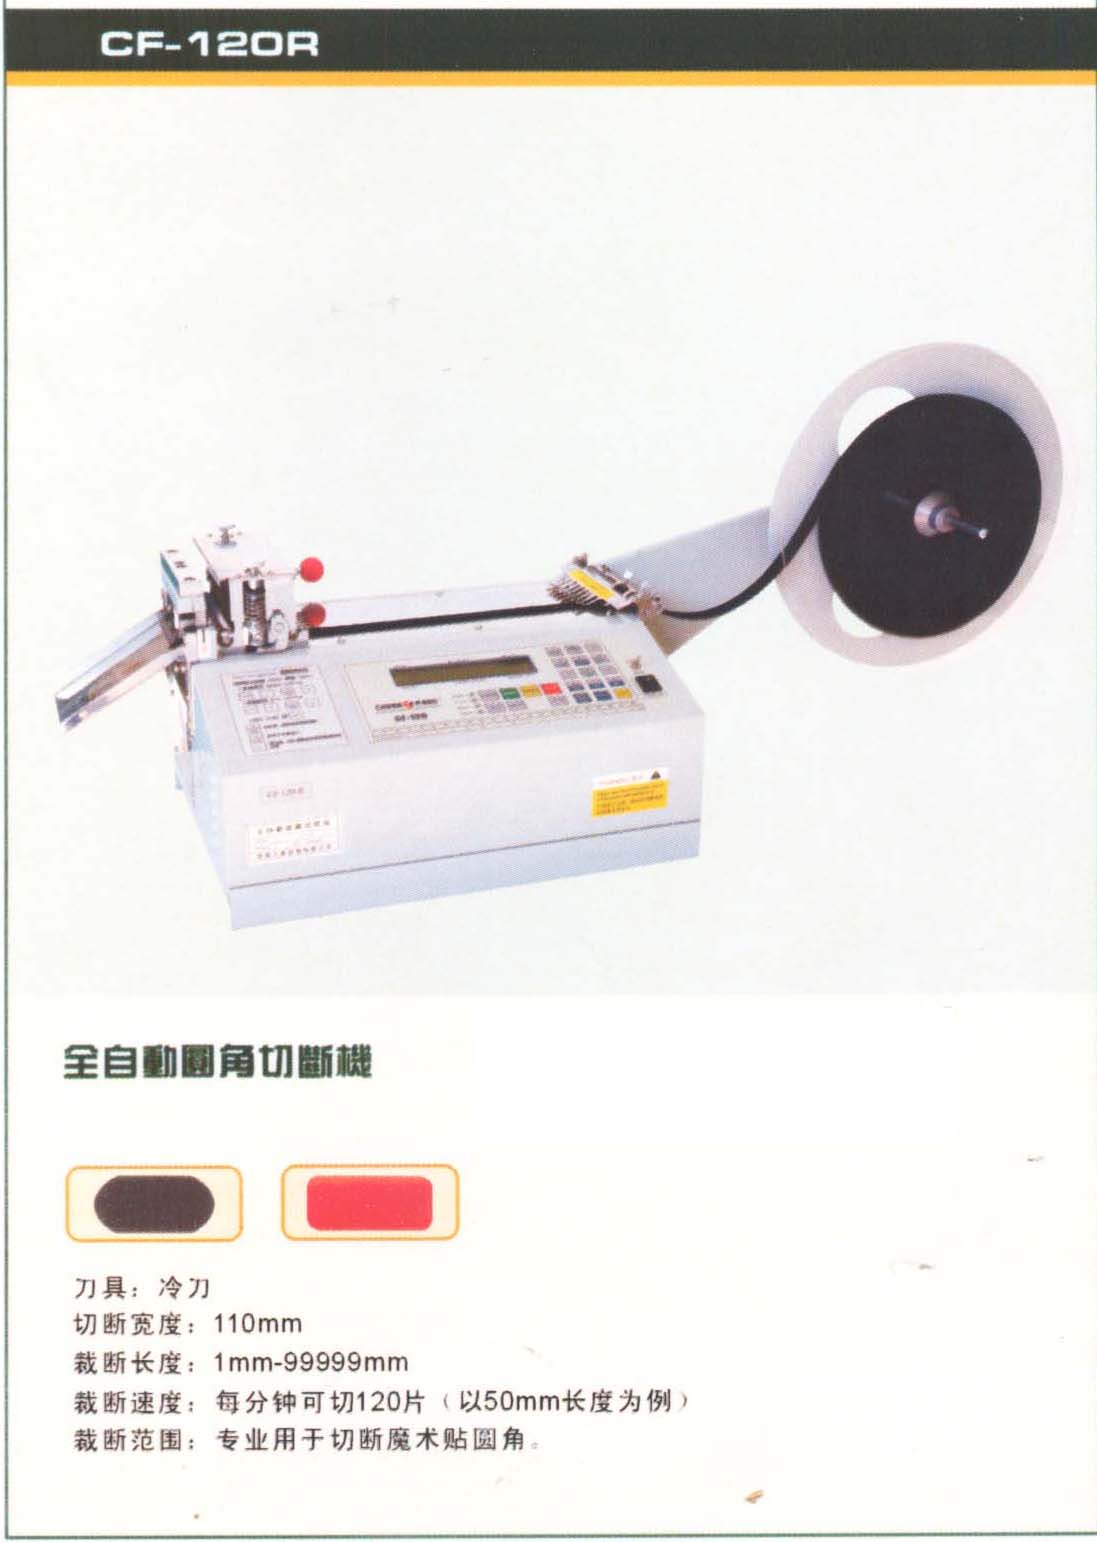  Velcro Round Cutter (Velcro ronde Cutter)